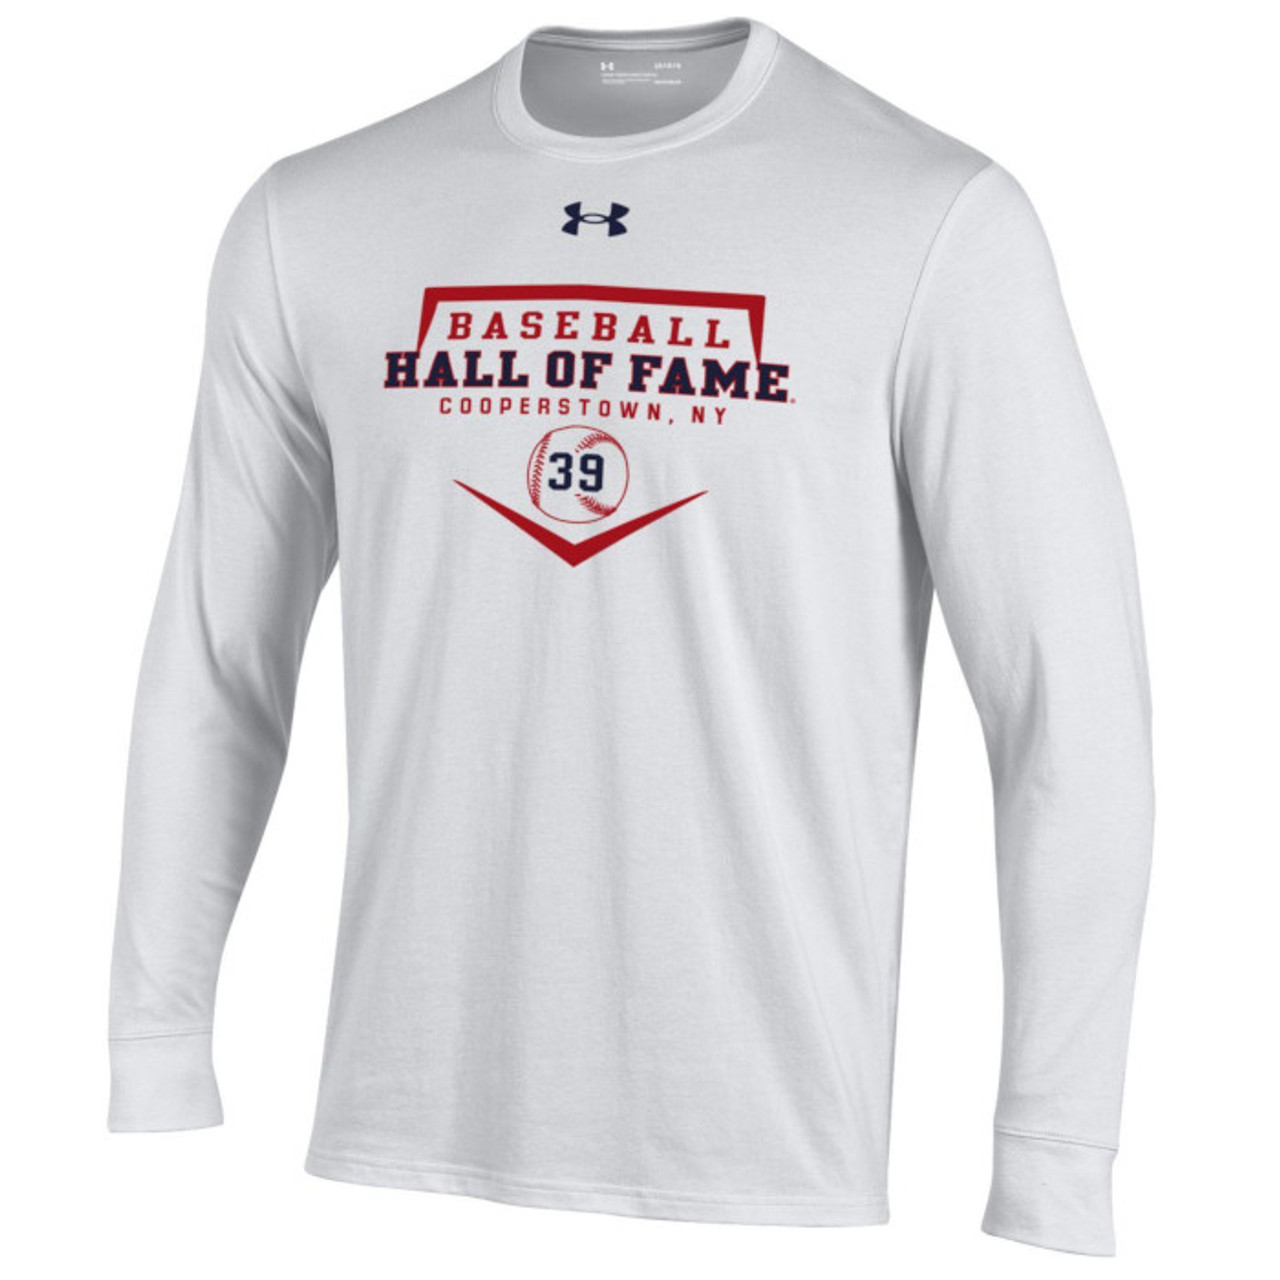 Chicago Cubs Youth 3/4 Sleeve Raglan Baseball T-Shirt - Clark Street Sports